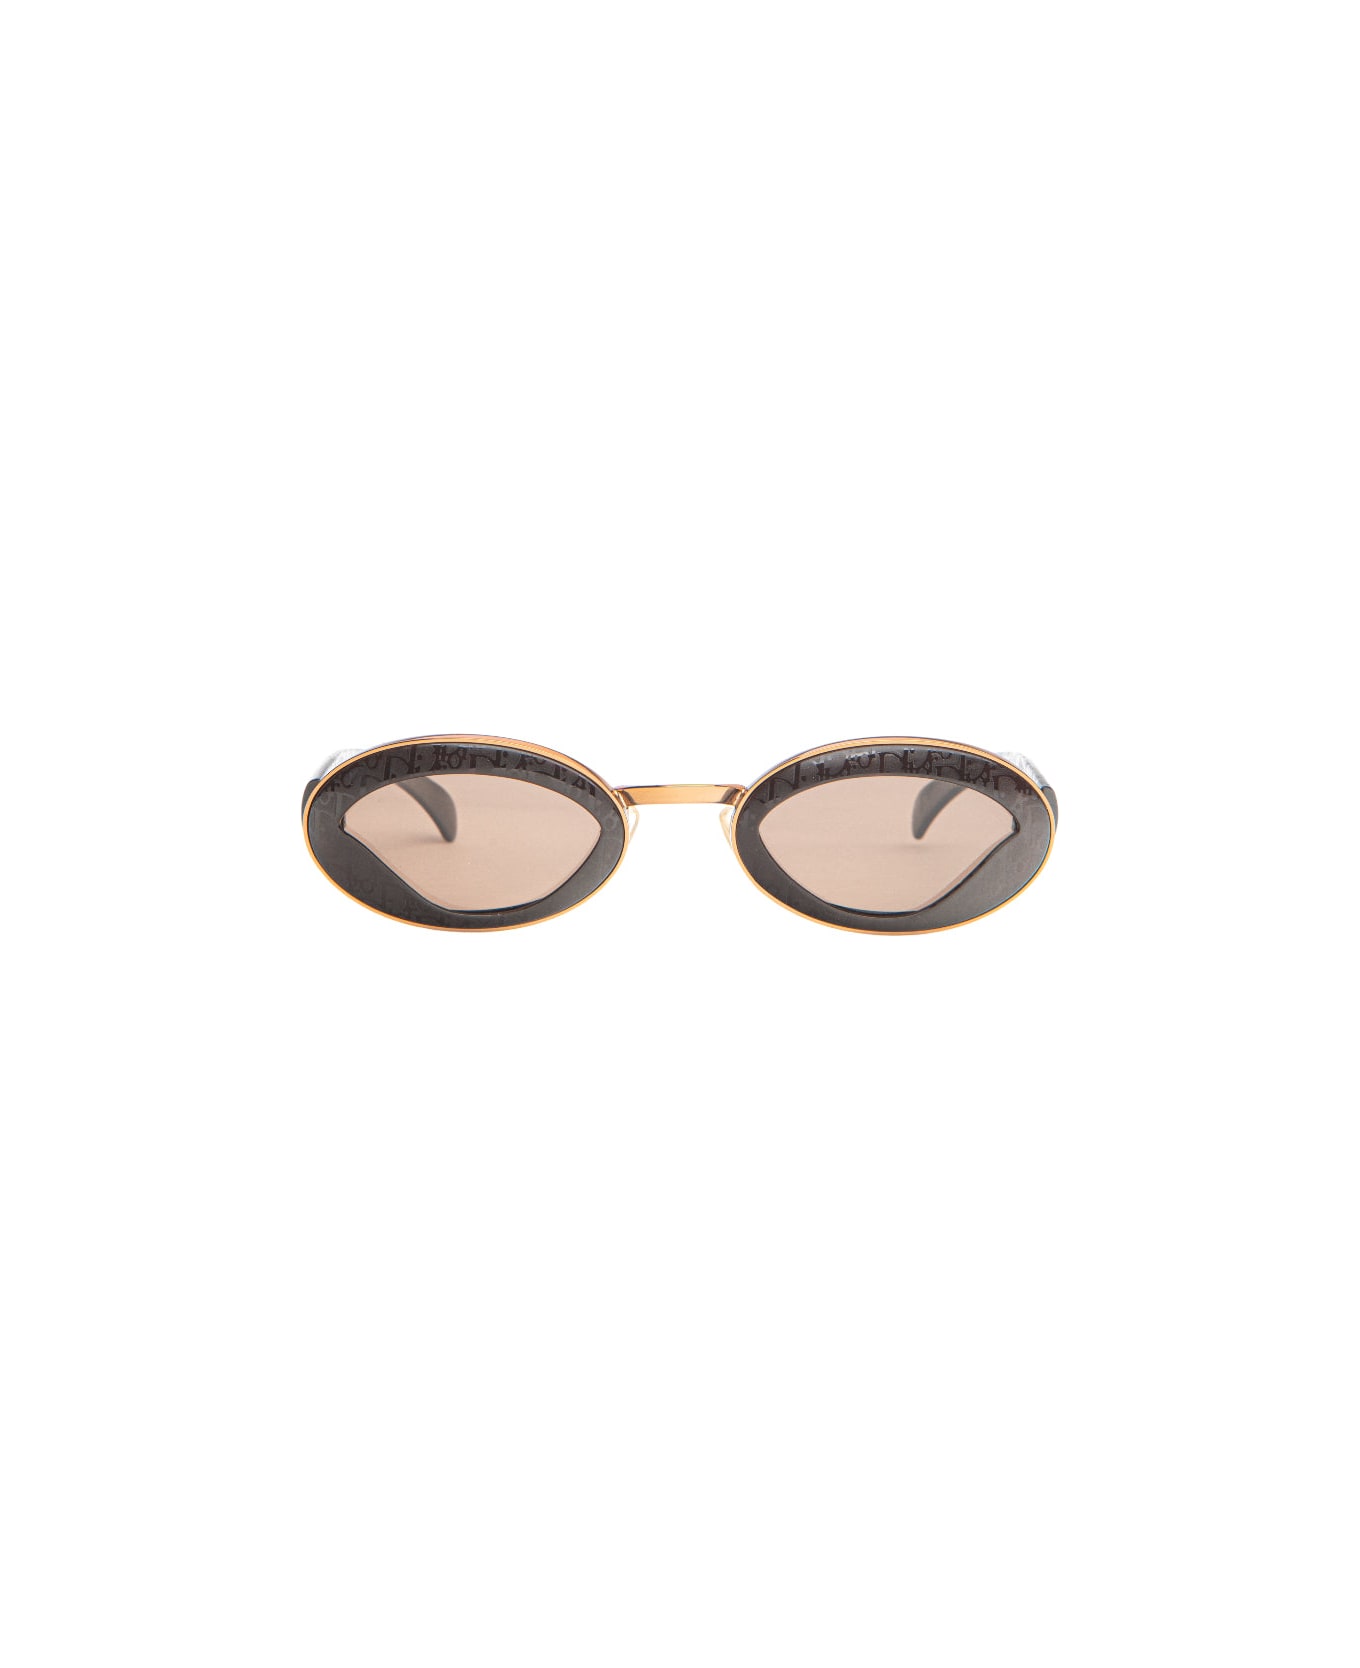 Dior Eyewear Pin Up - Limited Edition - Dark Brown Sunglasses